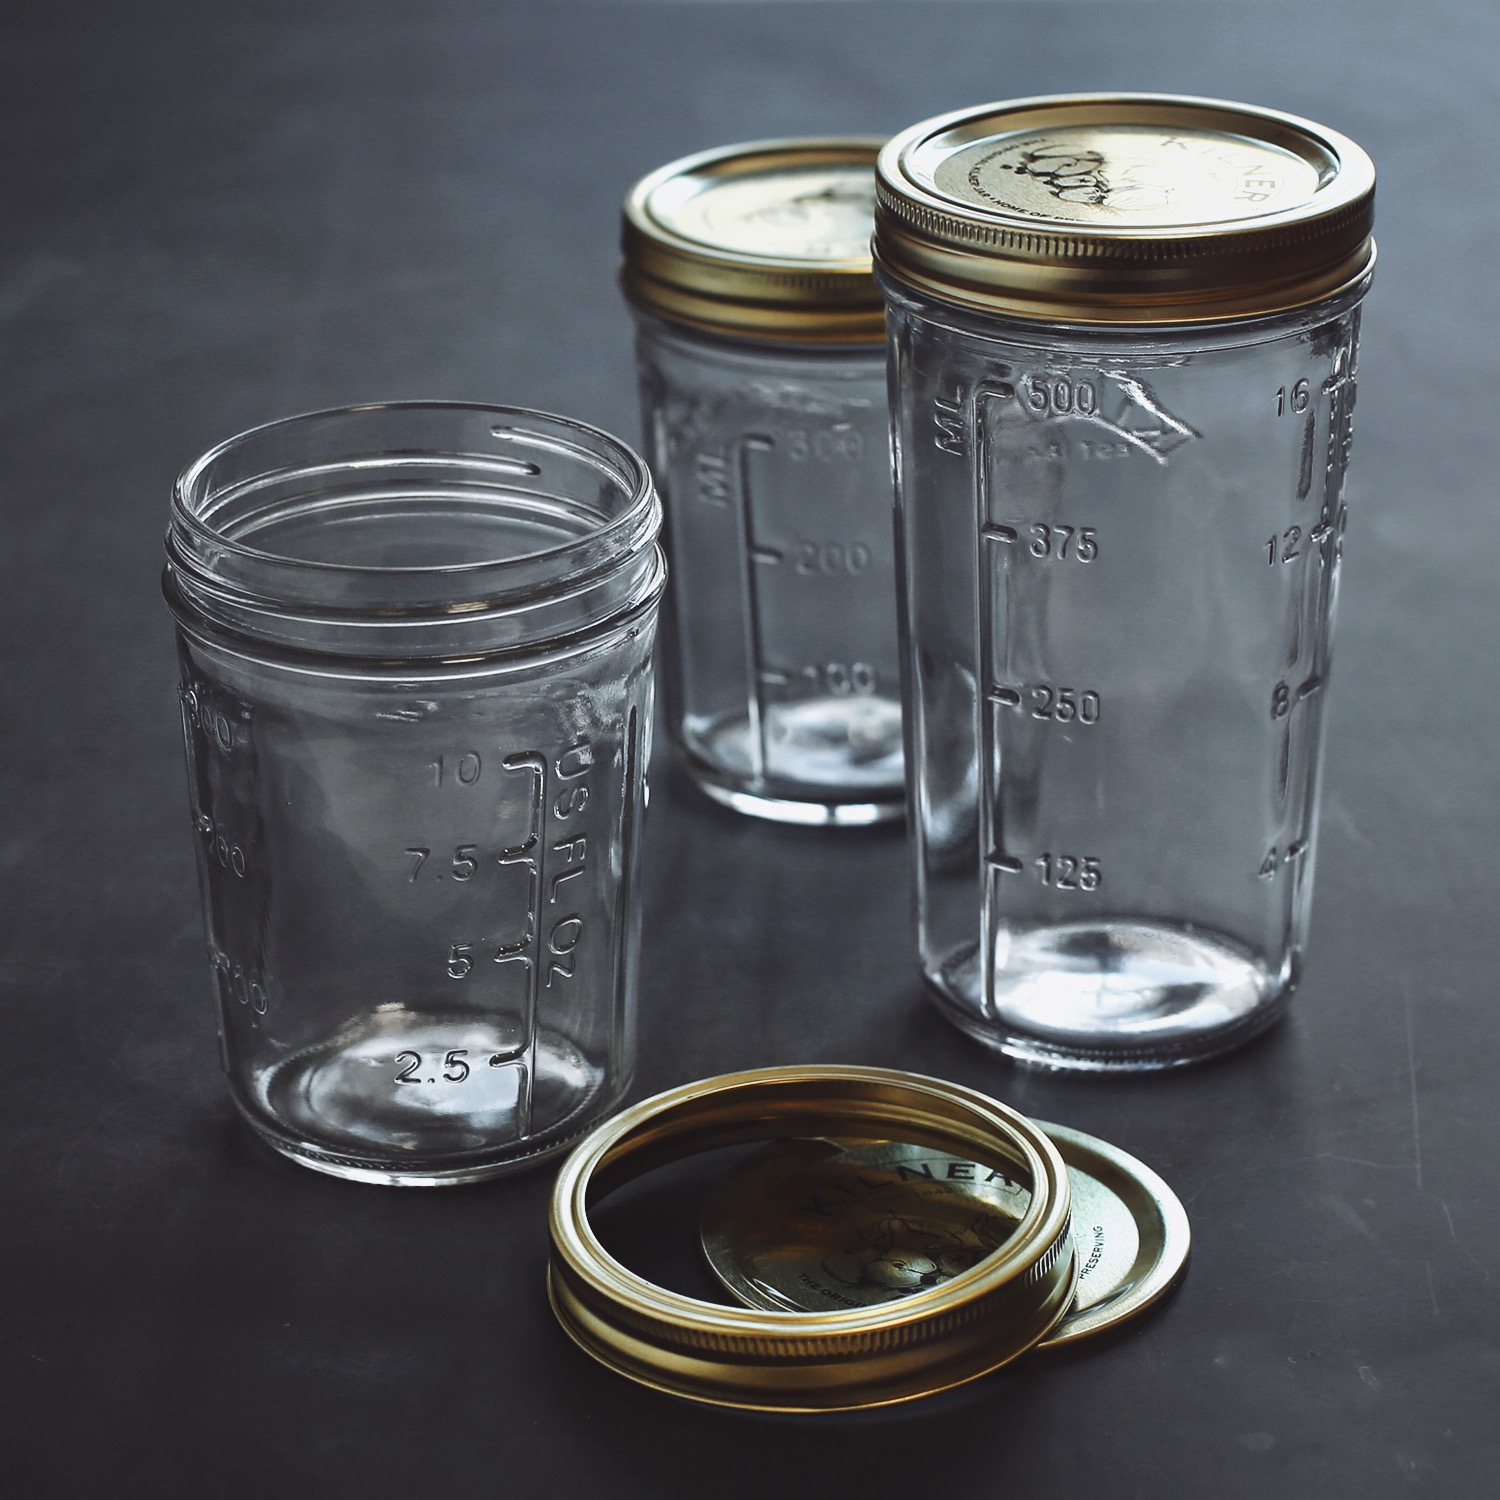 Kilner英国原装进口 威尔士系列玻璃密封罐储物罐五谷杂粮食品级